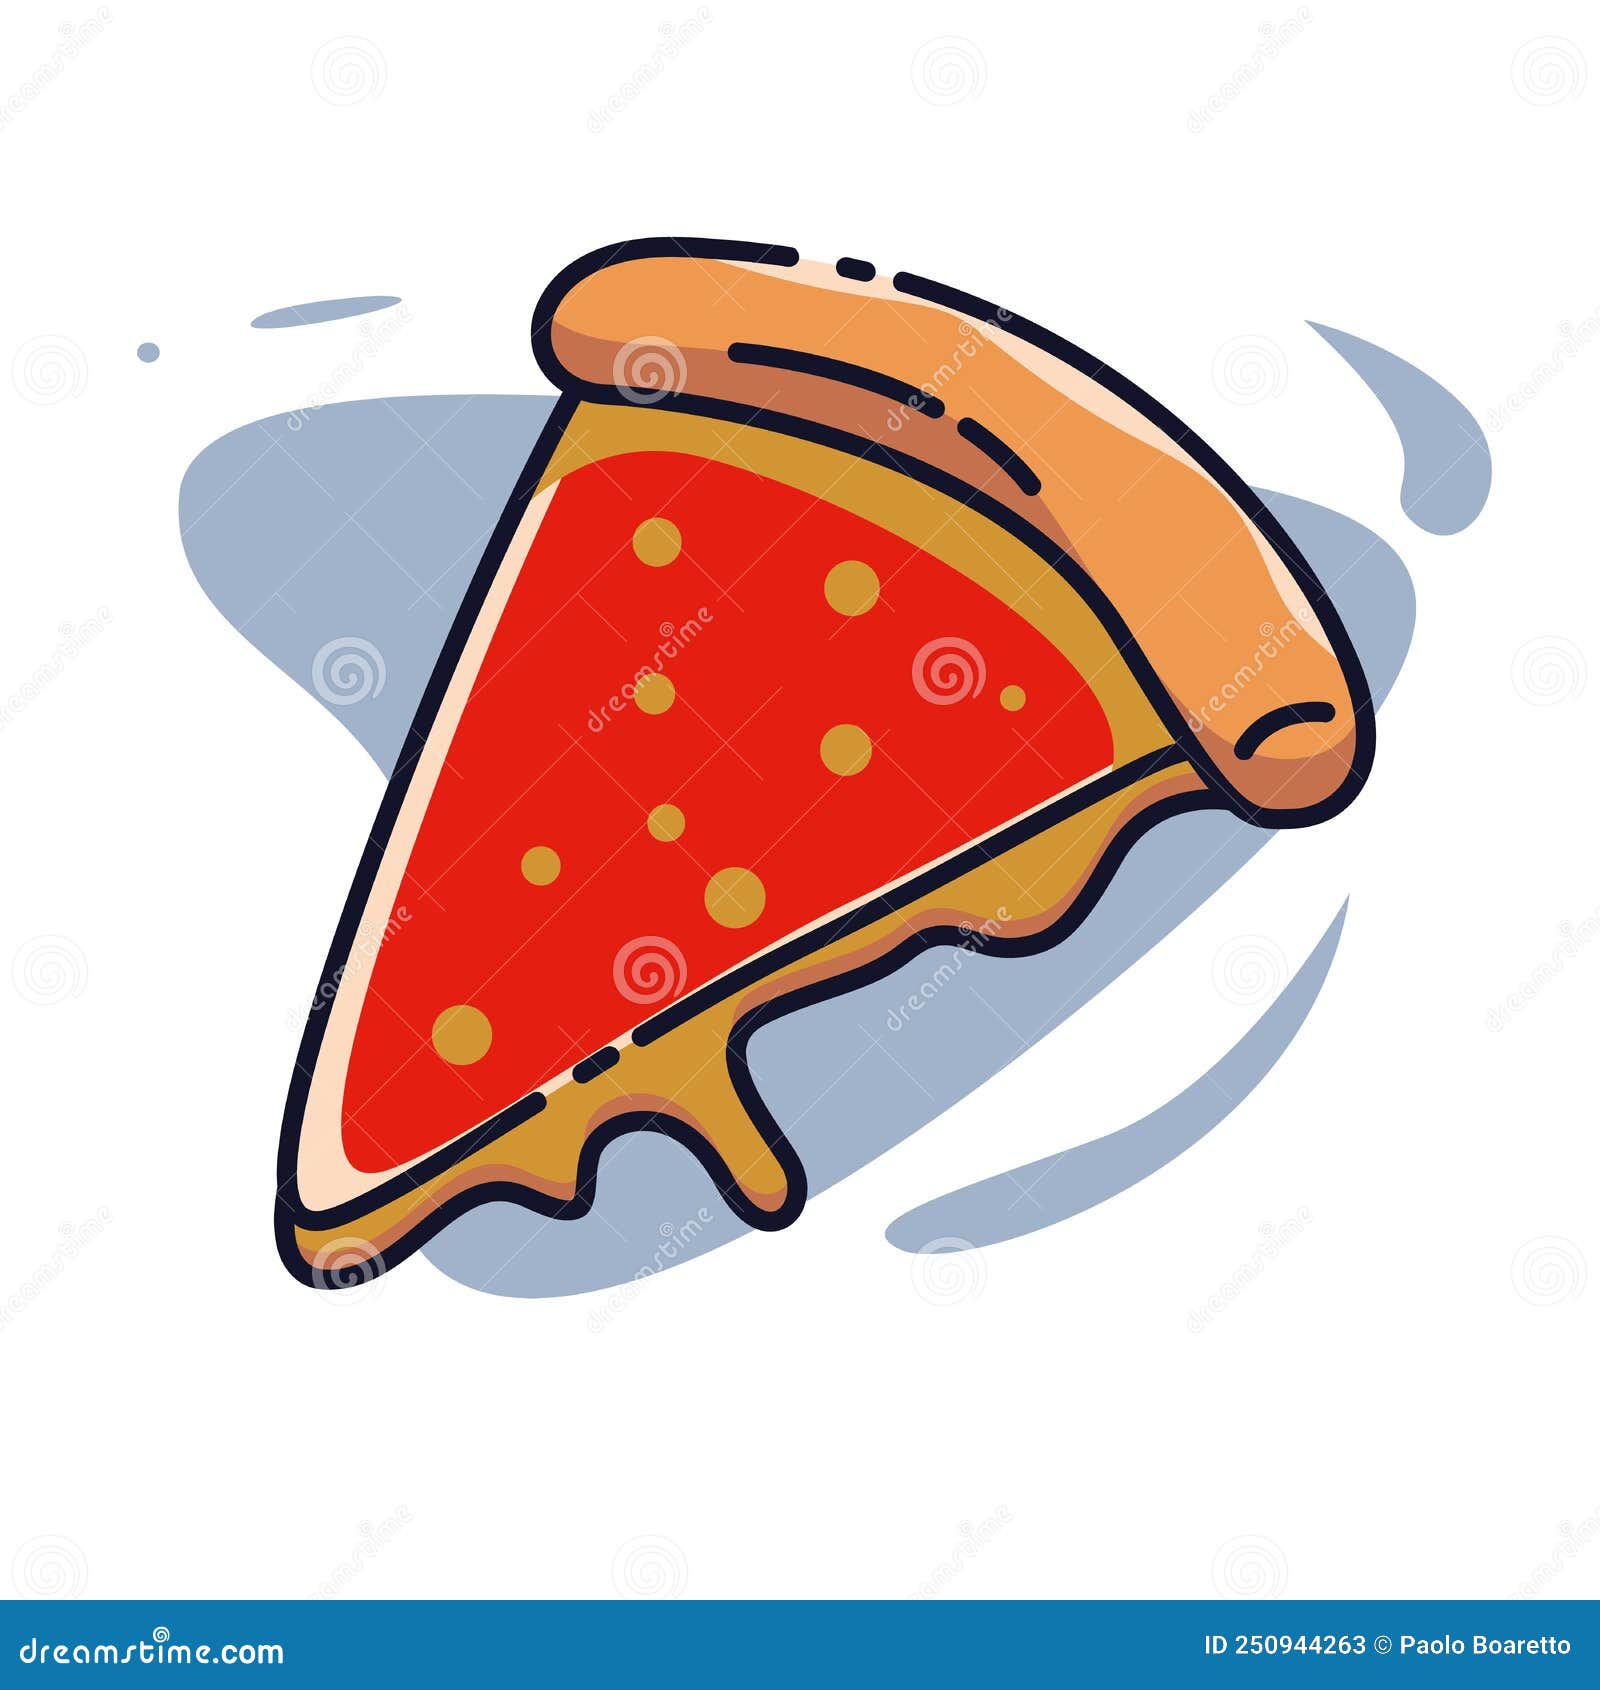 pizza slice on white background,